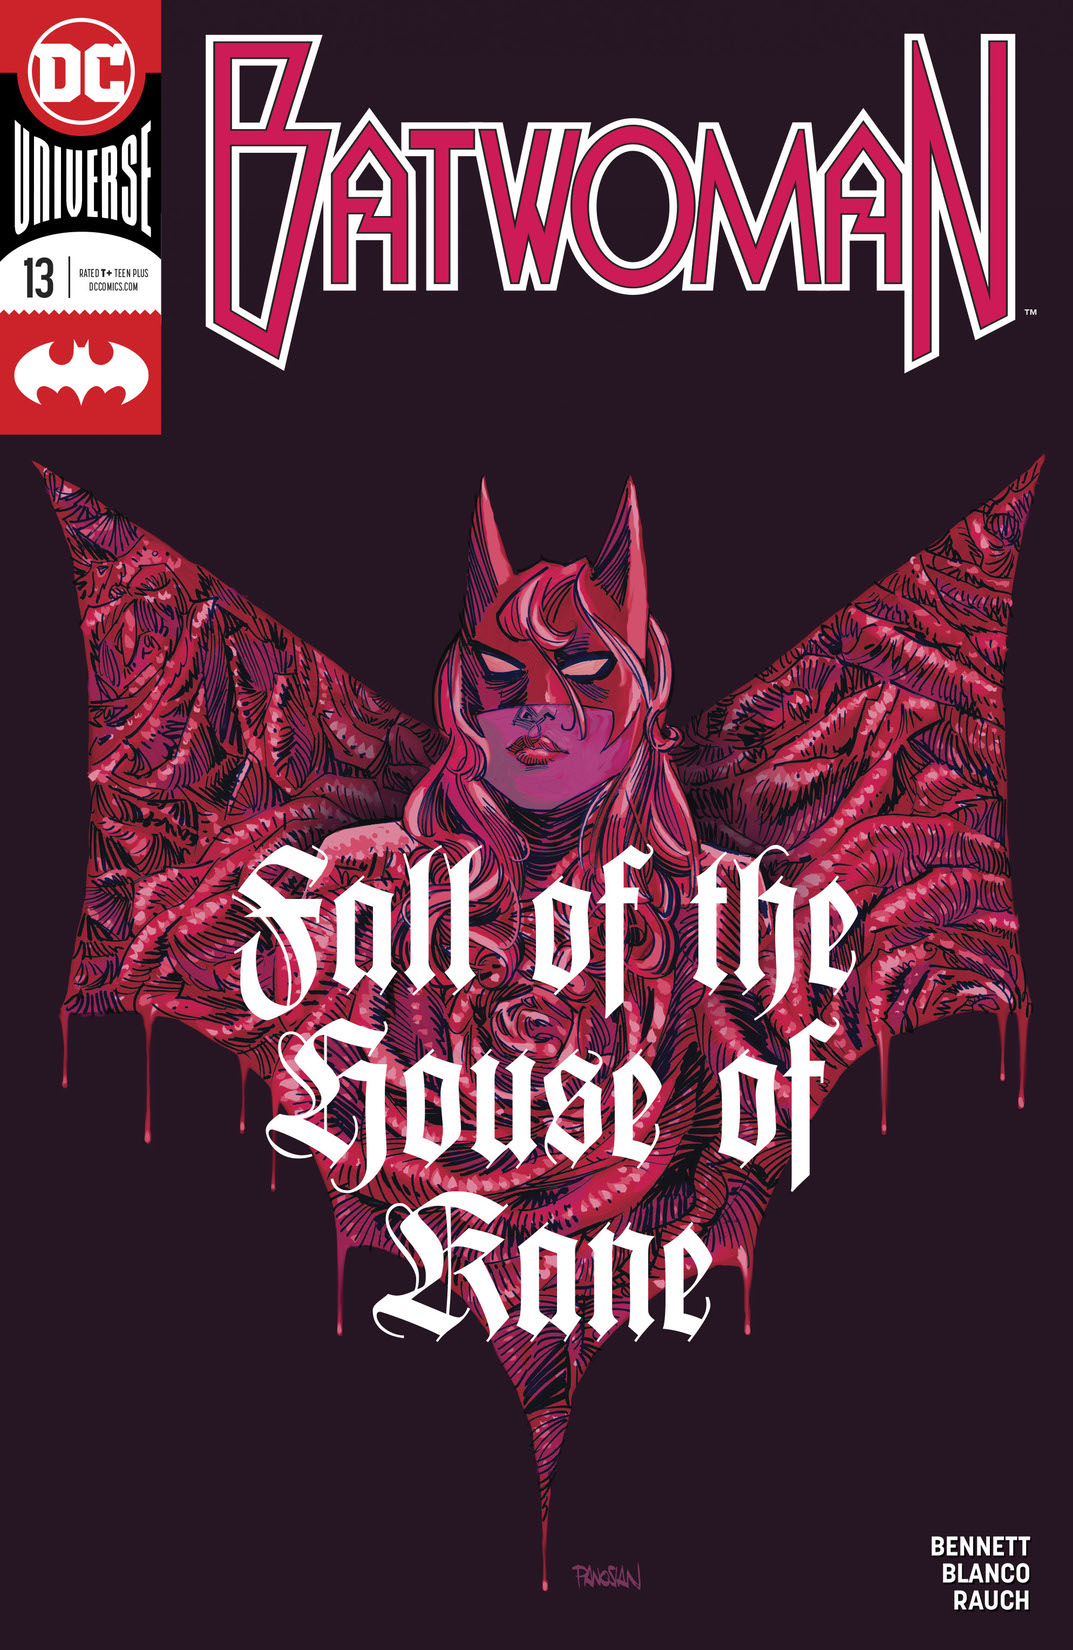 Batwoman (2017-) #13 preview images